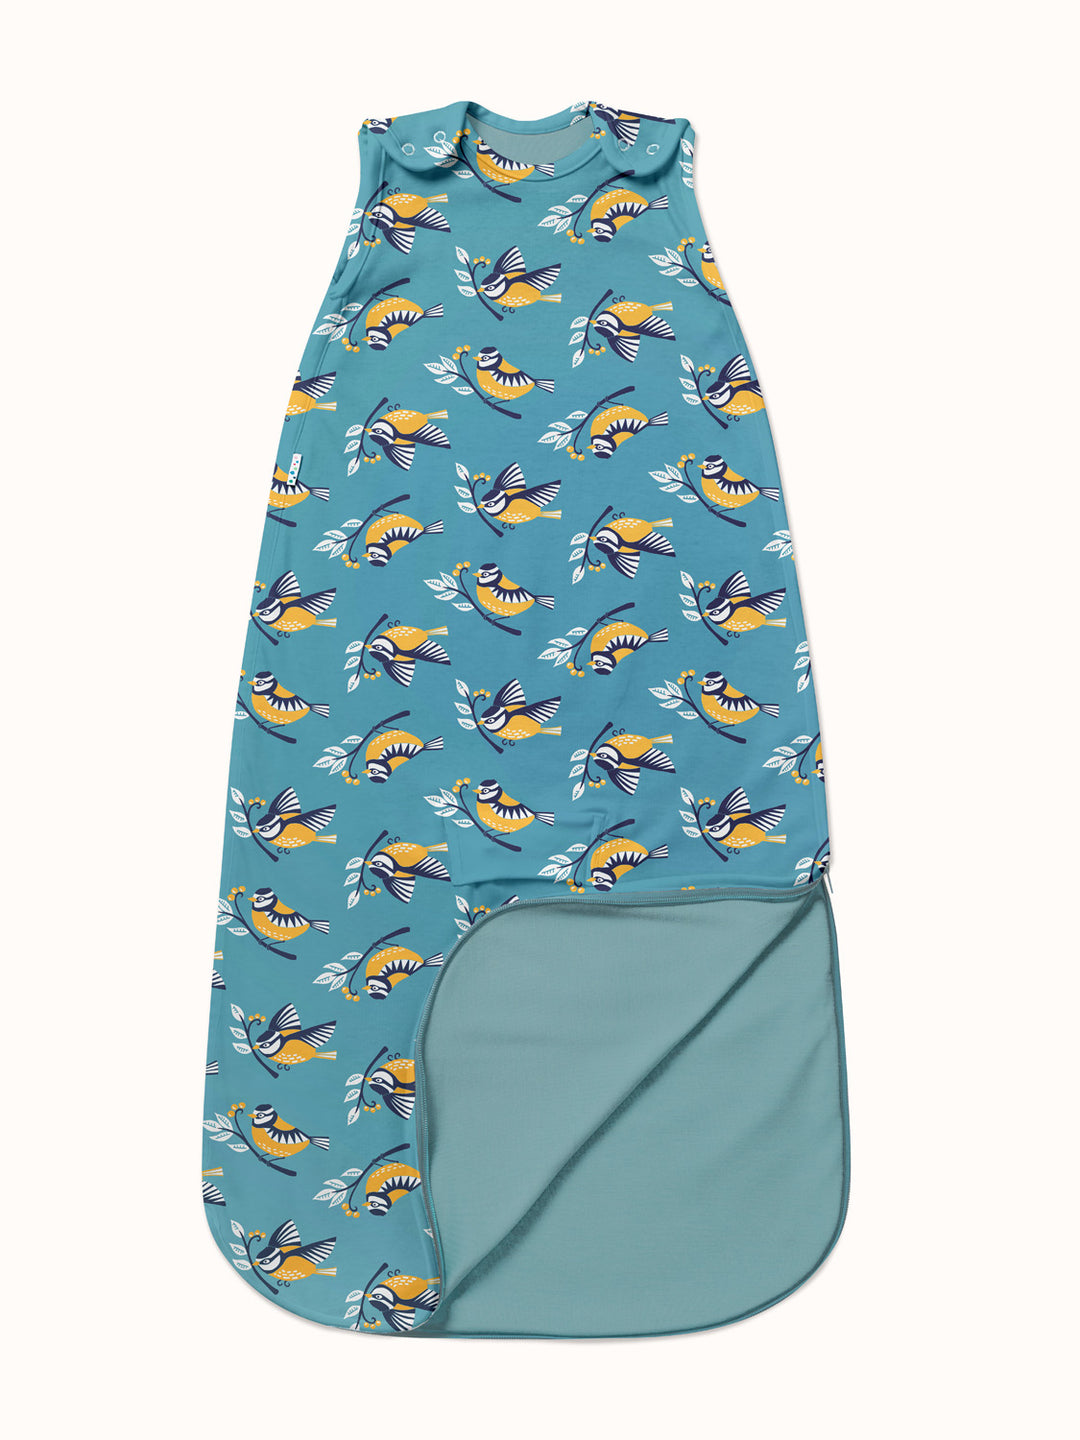 Merino baby sleeping bag navy birds #colour_blue-tit